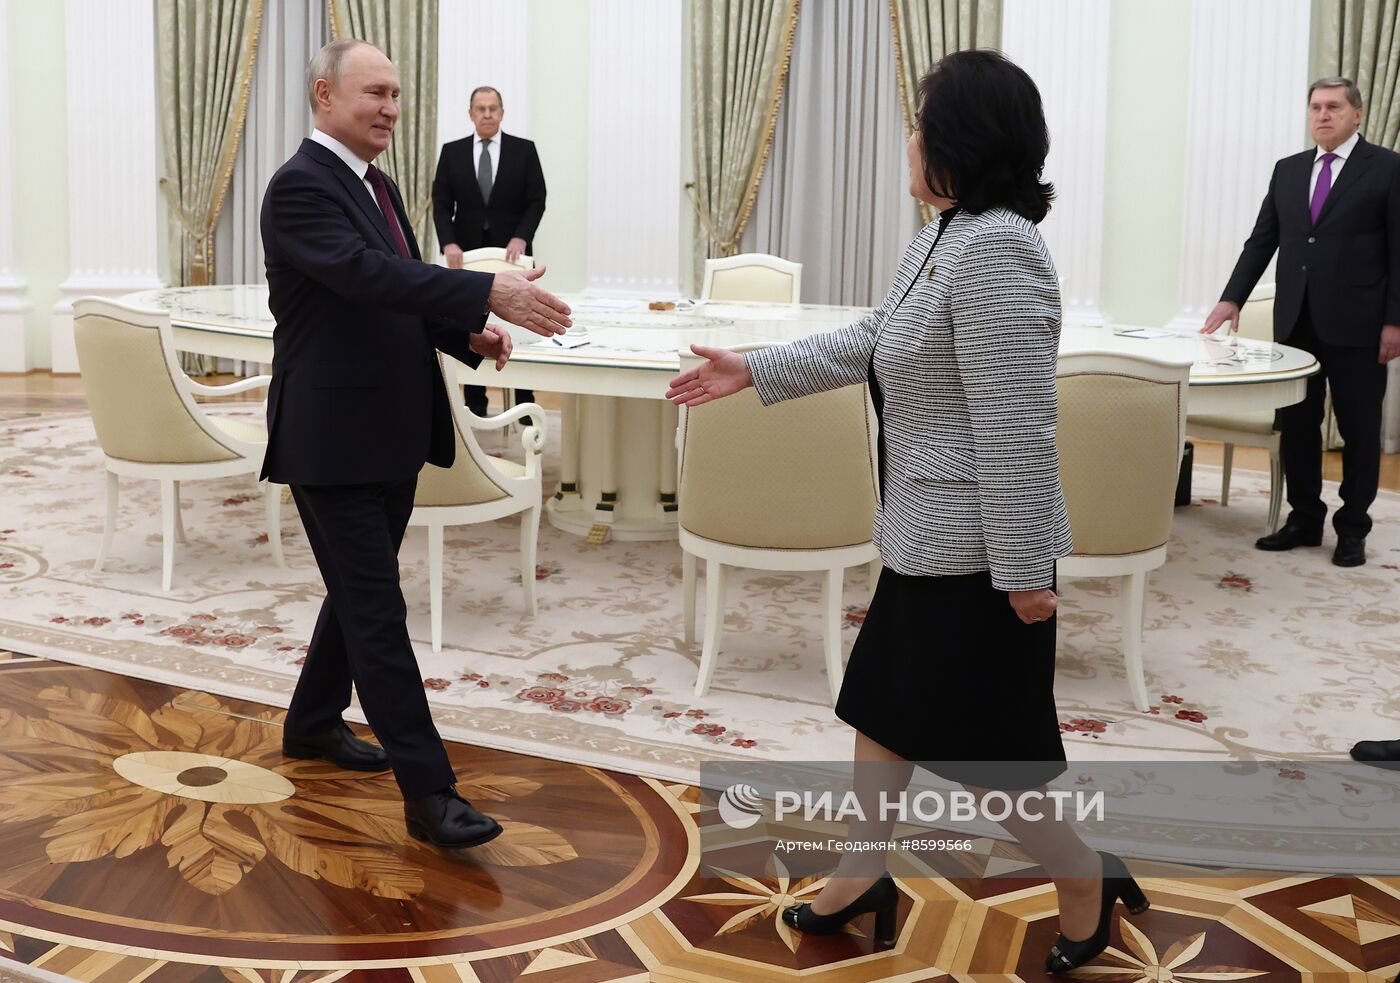 Президент РФ В. Путин встретился с главой МИД КНДР Цой Сон Хи